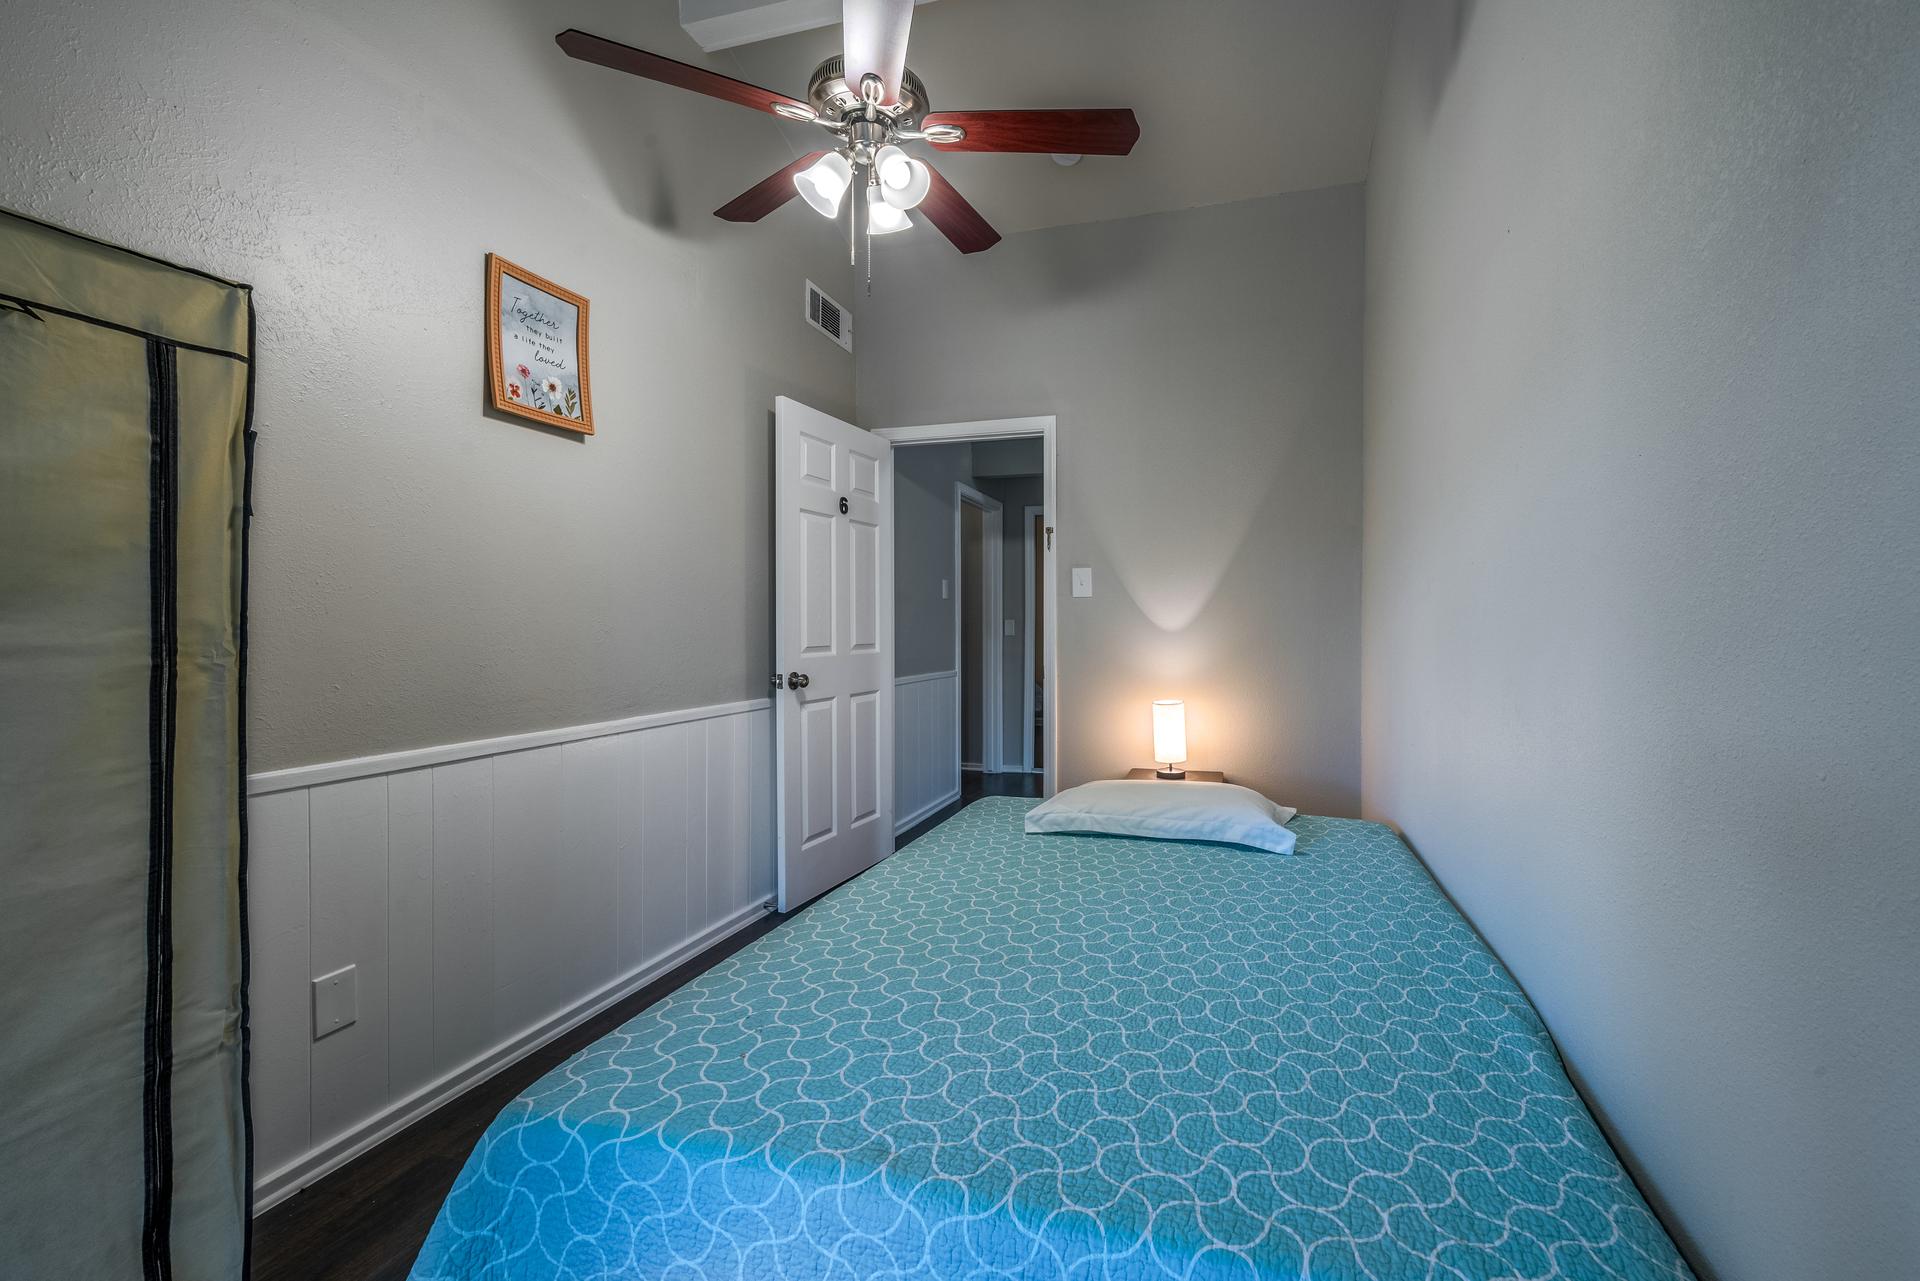 bedroom, detected: ceiling fan, carpet, window blind, bed